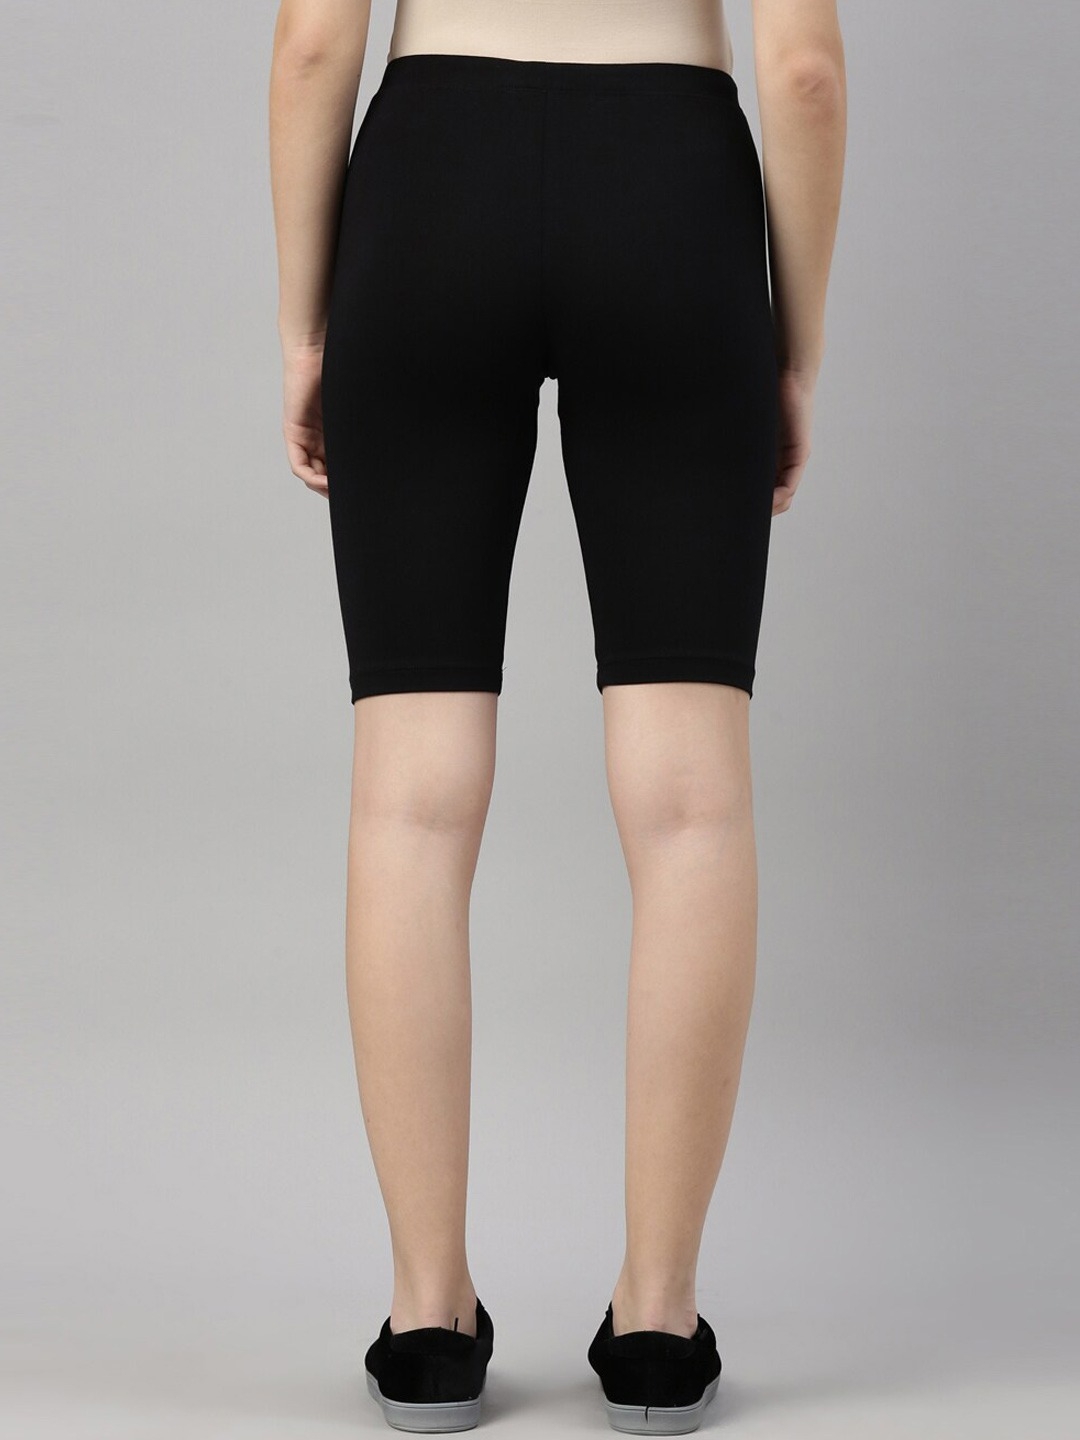 Kryptic | Kryptic Women White and Black Slim Fit Regular Shorts Pack of 2 4